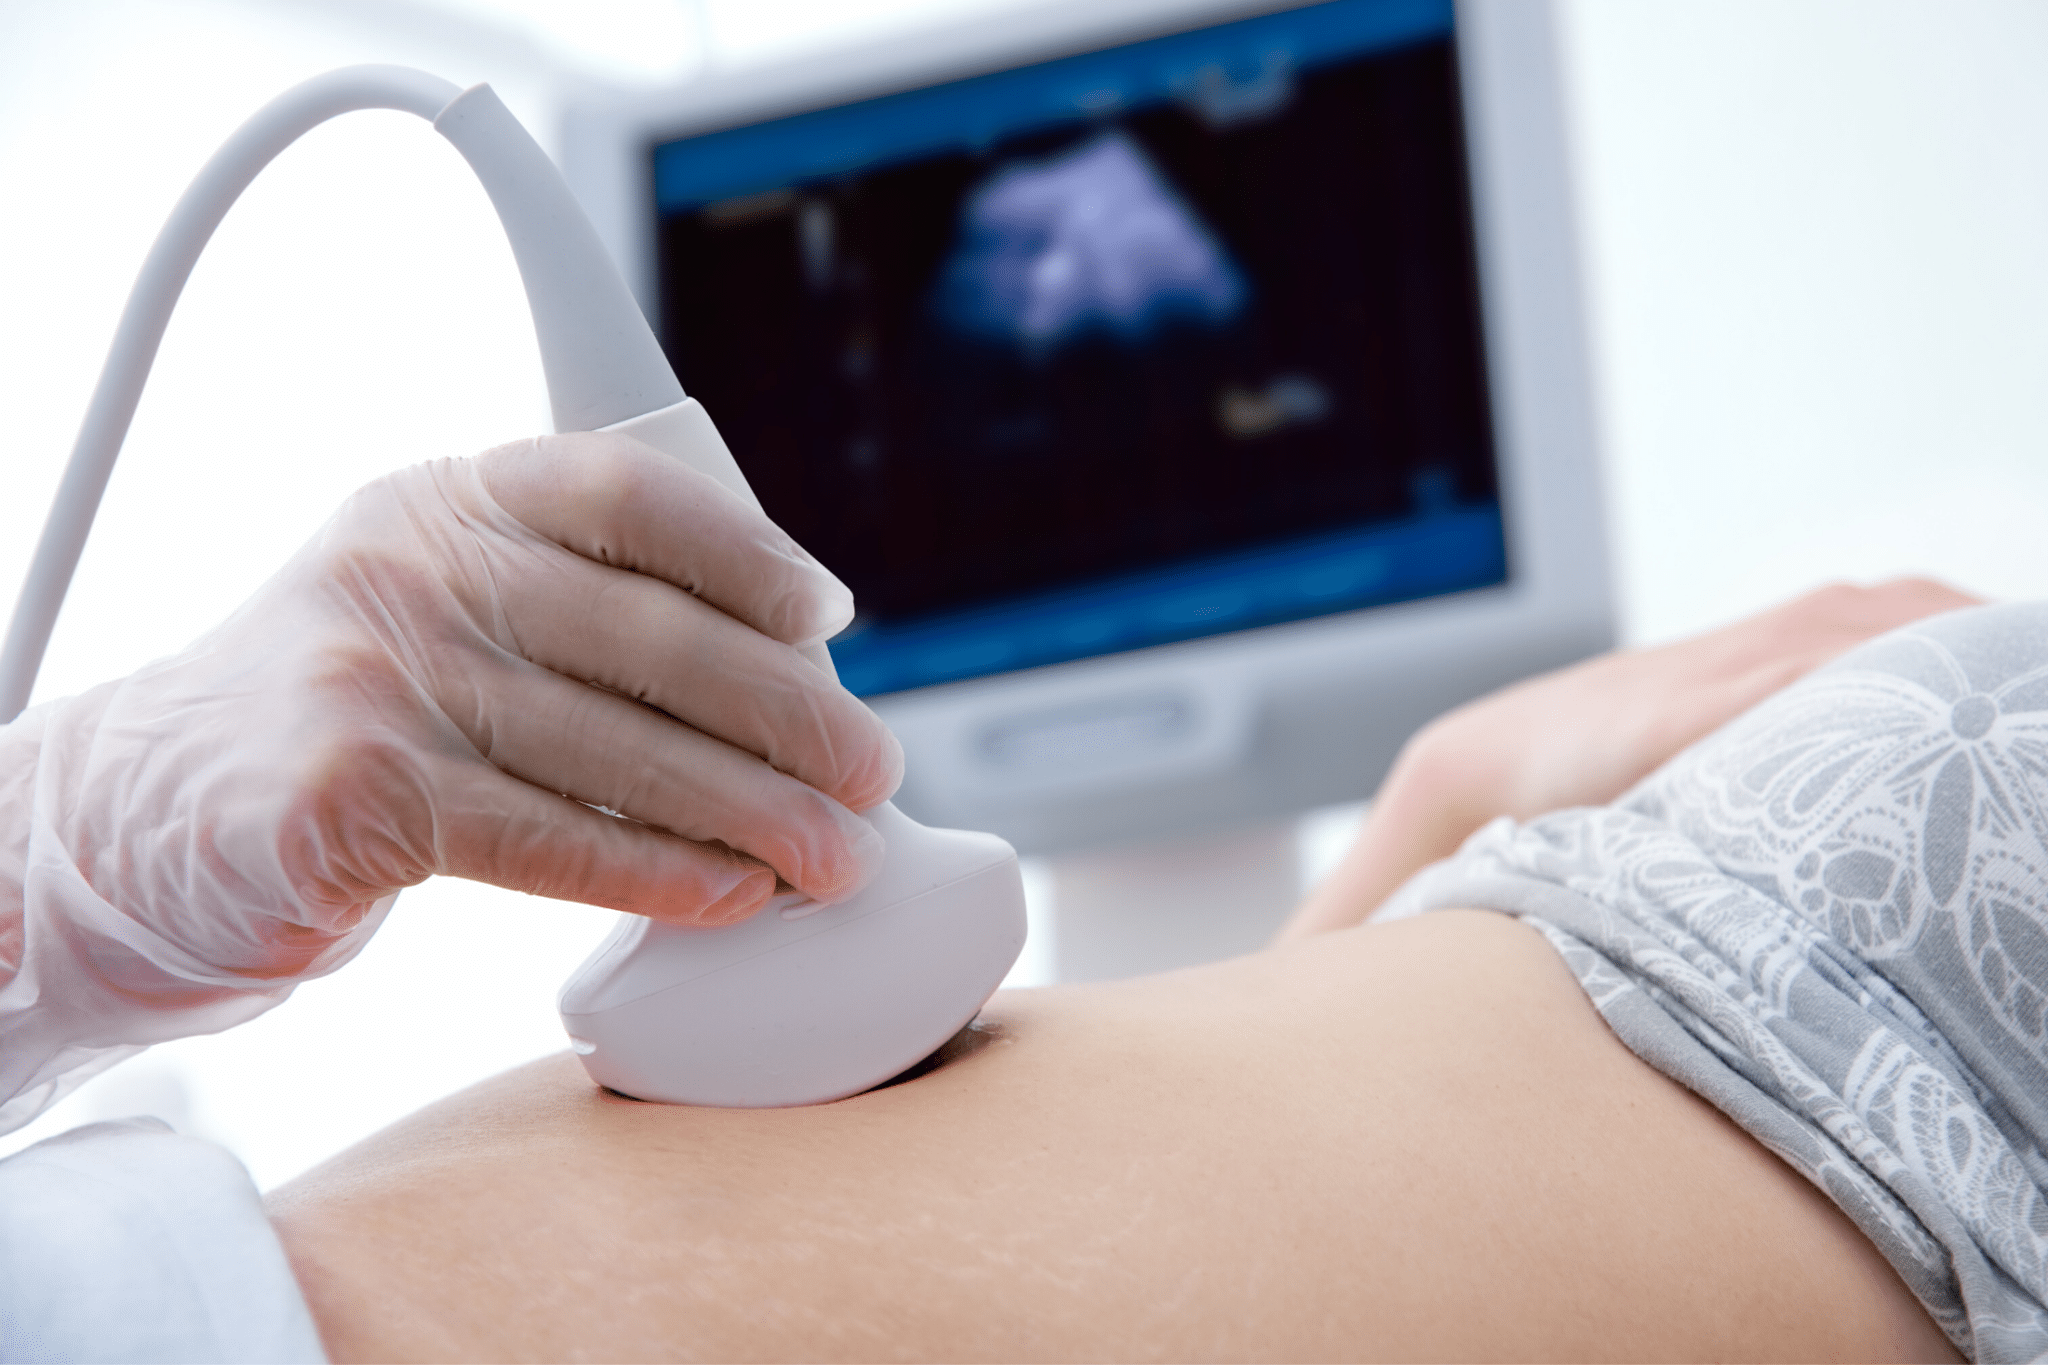 Ultrasounds: How Many Should I Have?